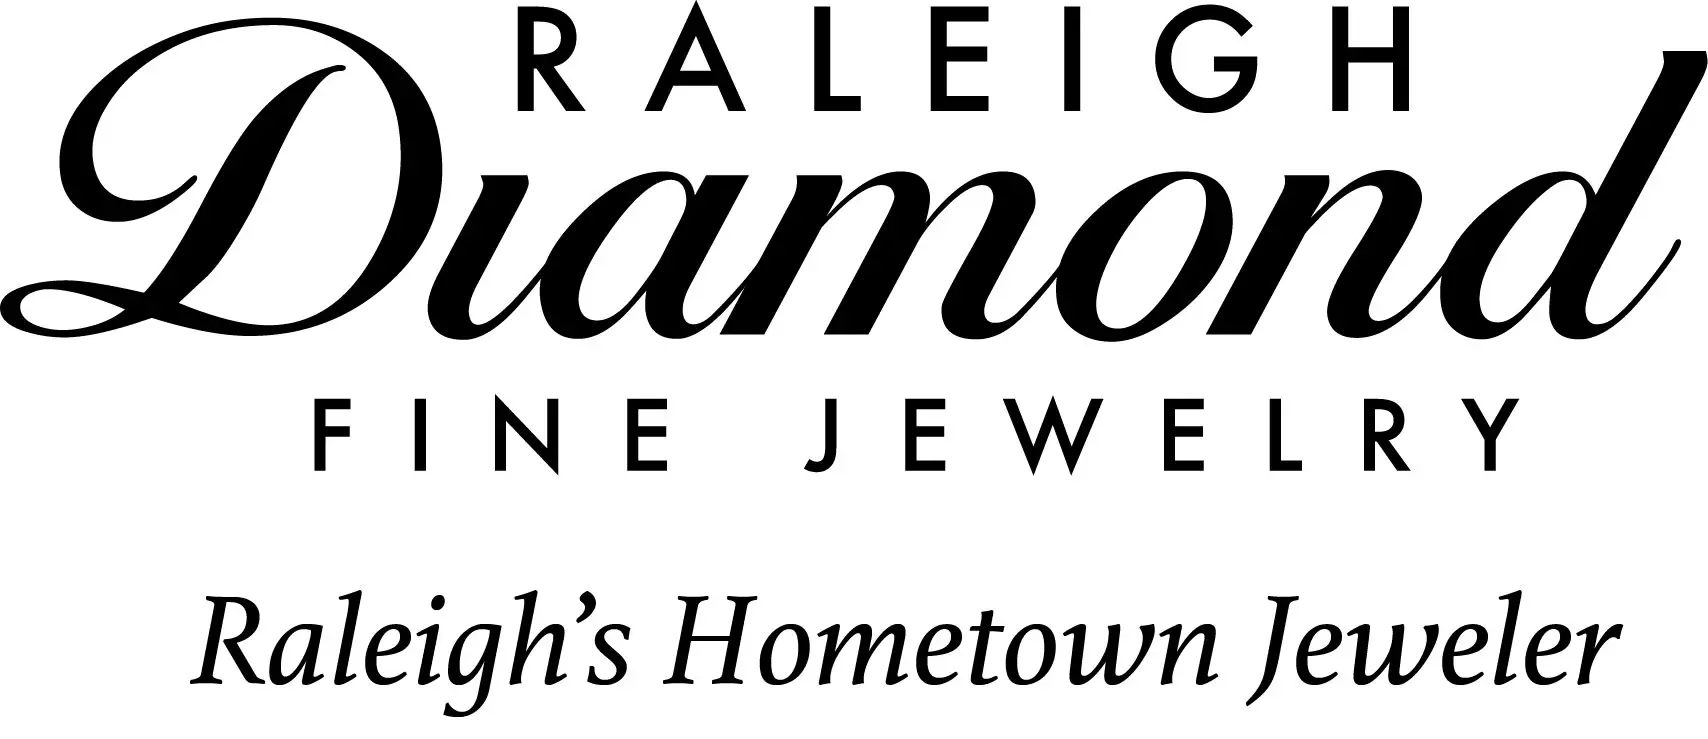 Raleigh Diamond Tagline 9.21